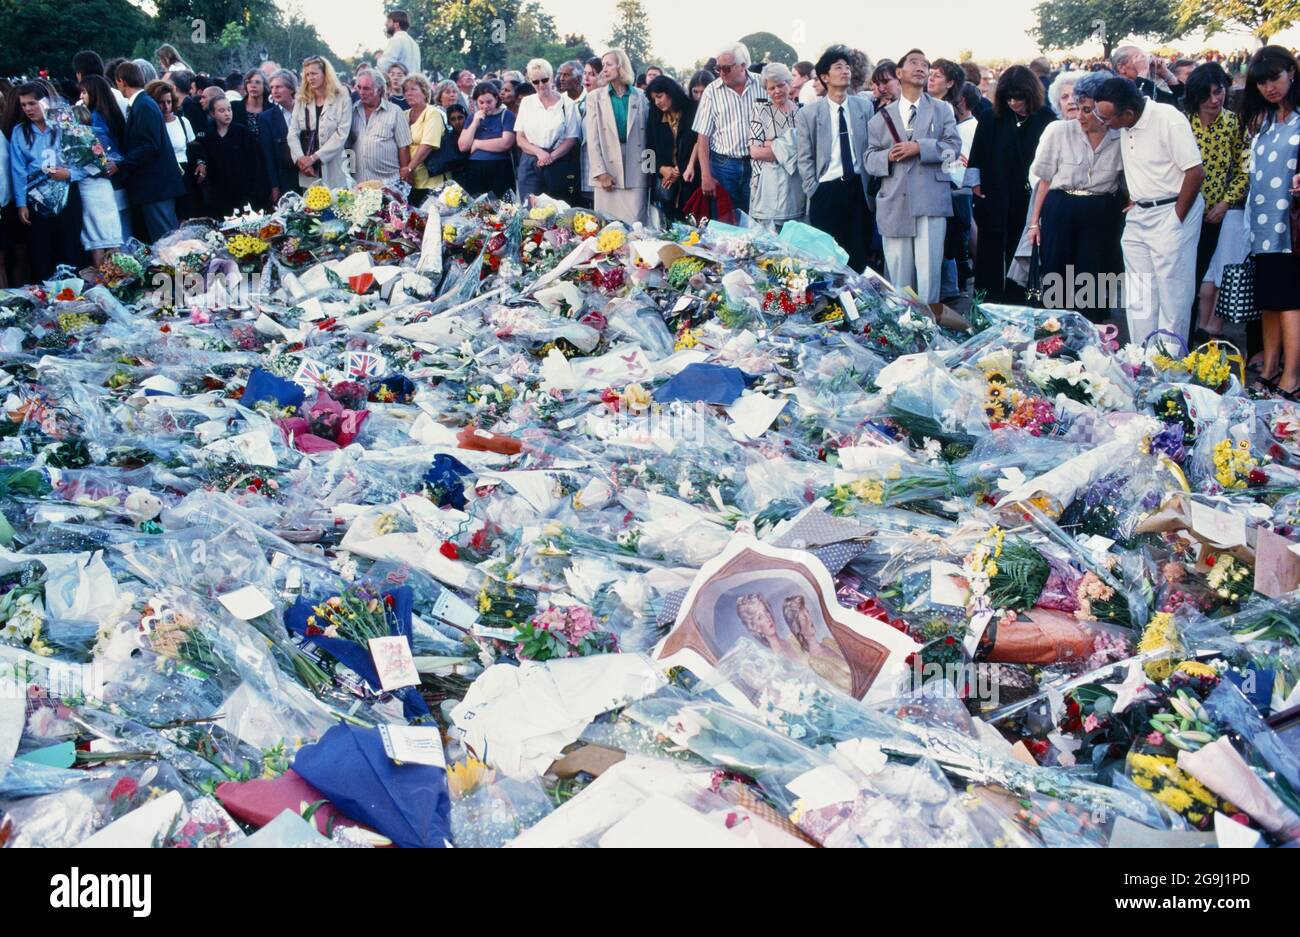 Tributi floreali per la principessa Diana dopo la sua morte il 31.08.97, Kensington Palace, Kensington Gardens, Londra. REGNO UNITO Foto Stock